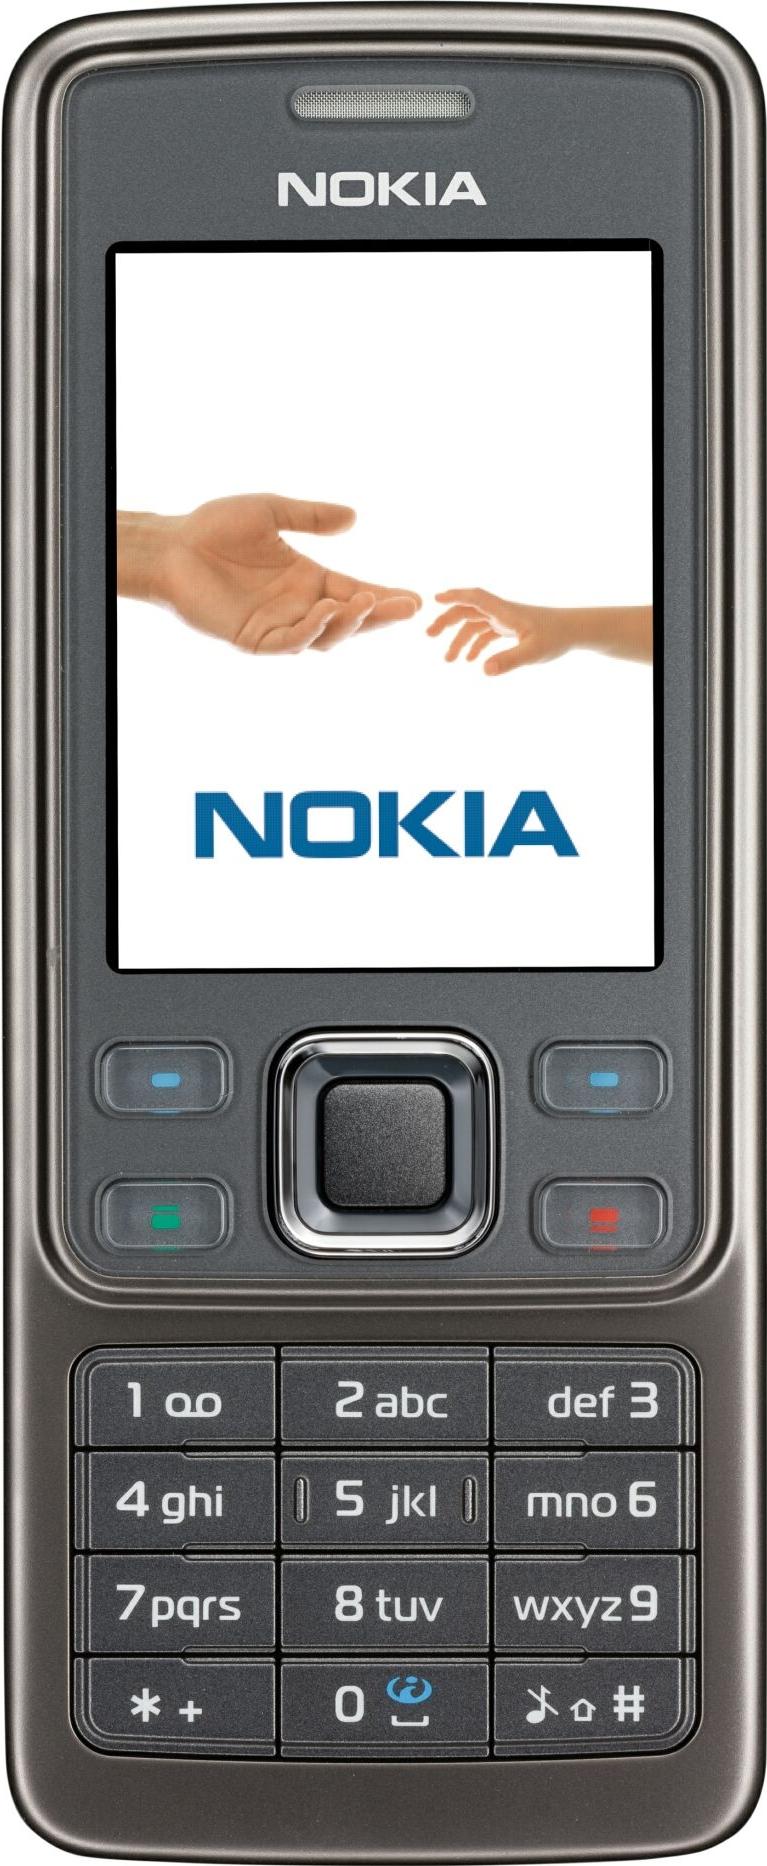 Nokia 6300i Actual Size Image